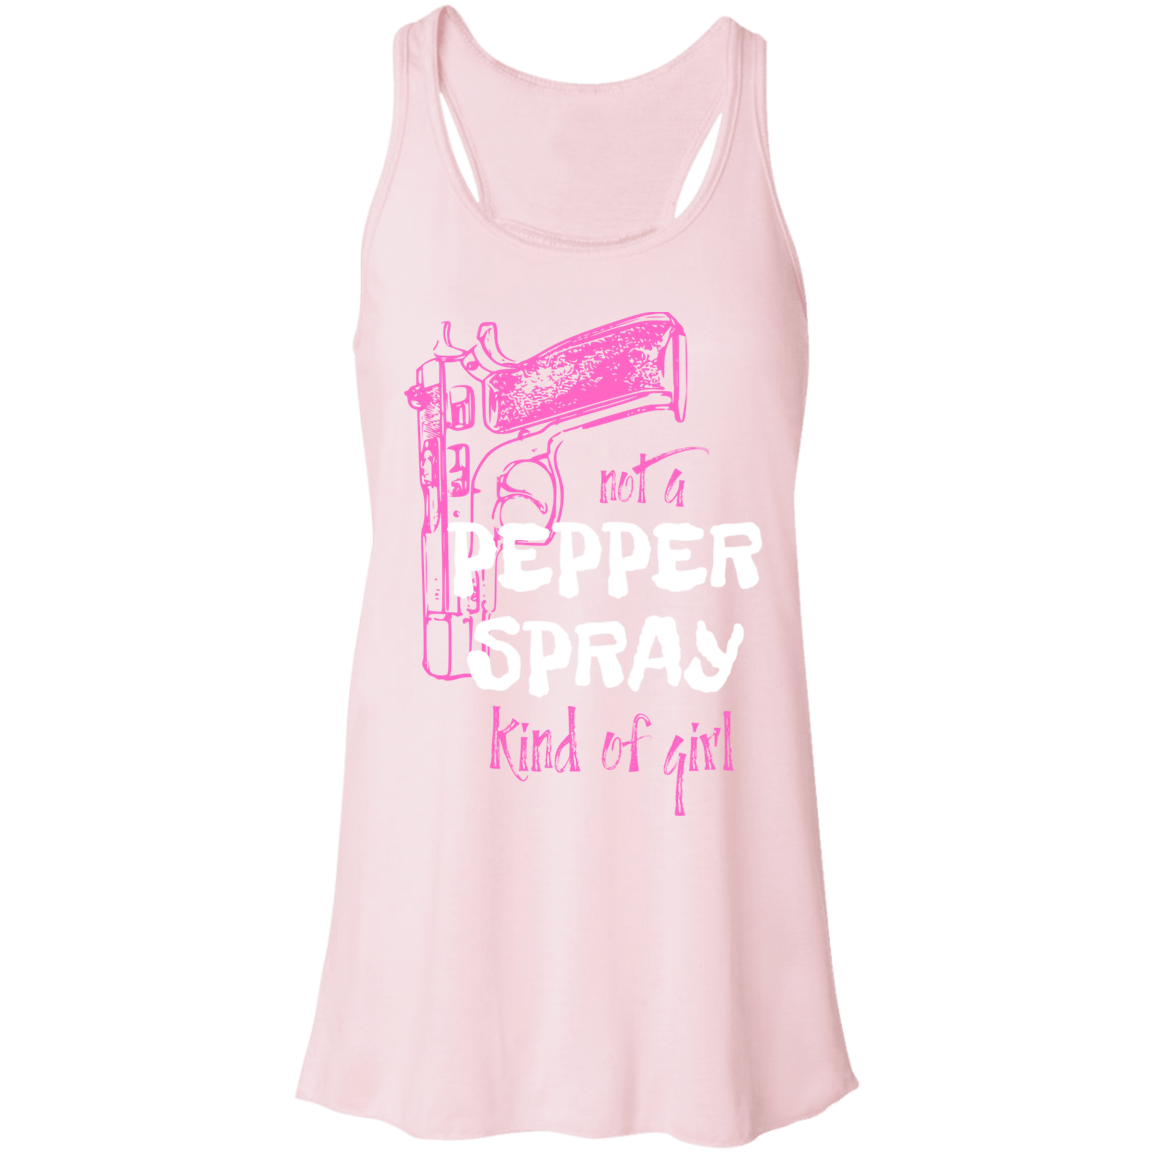 Pepper Spray Kind Of Girl  Flowy Racerback Tank /Womans T-shirts